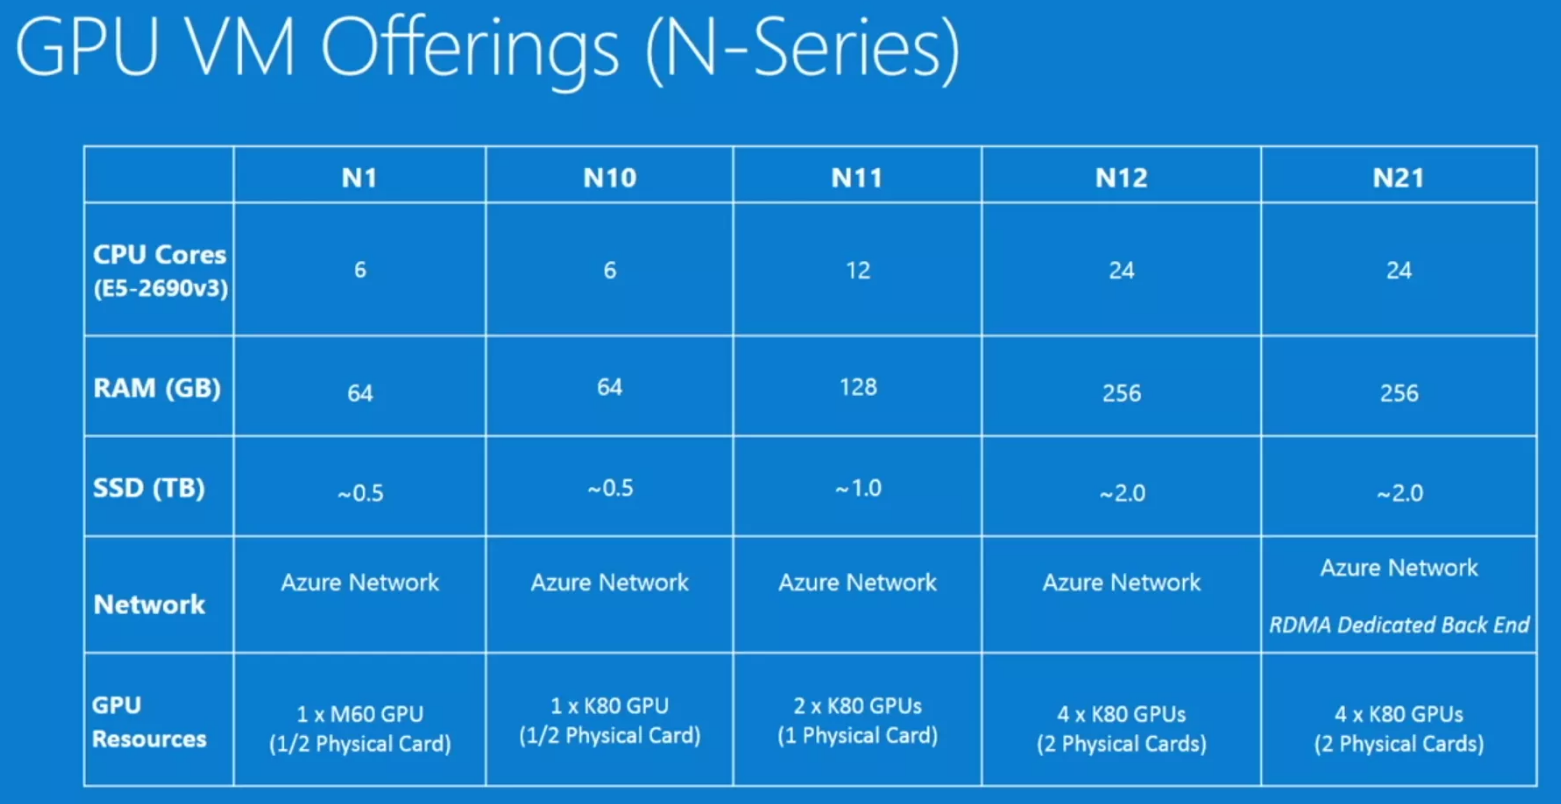 The announced N-Series virtual machine sizes [Image Credit: Microsoft]